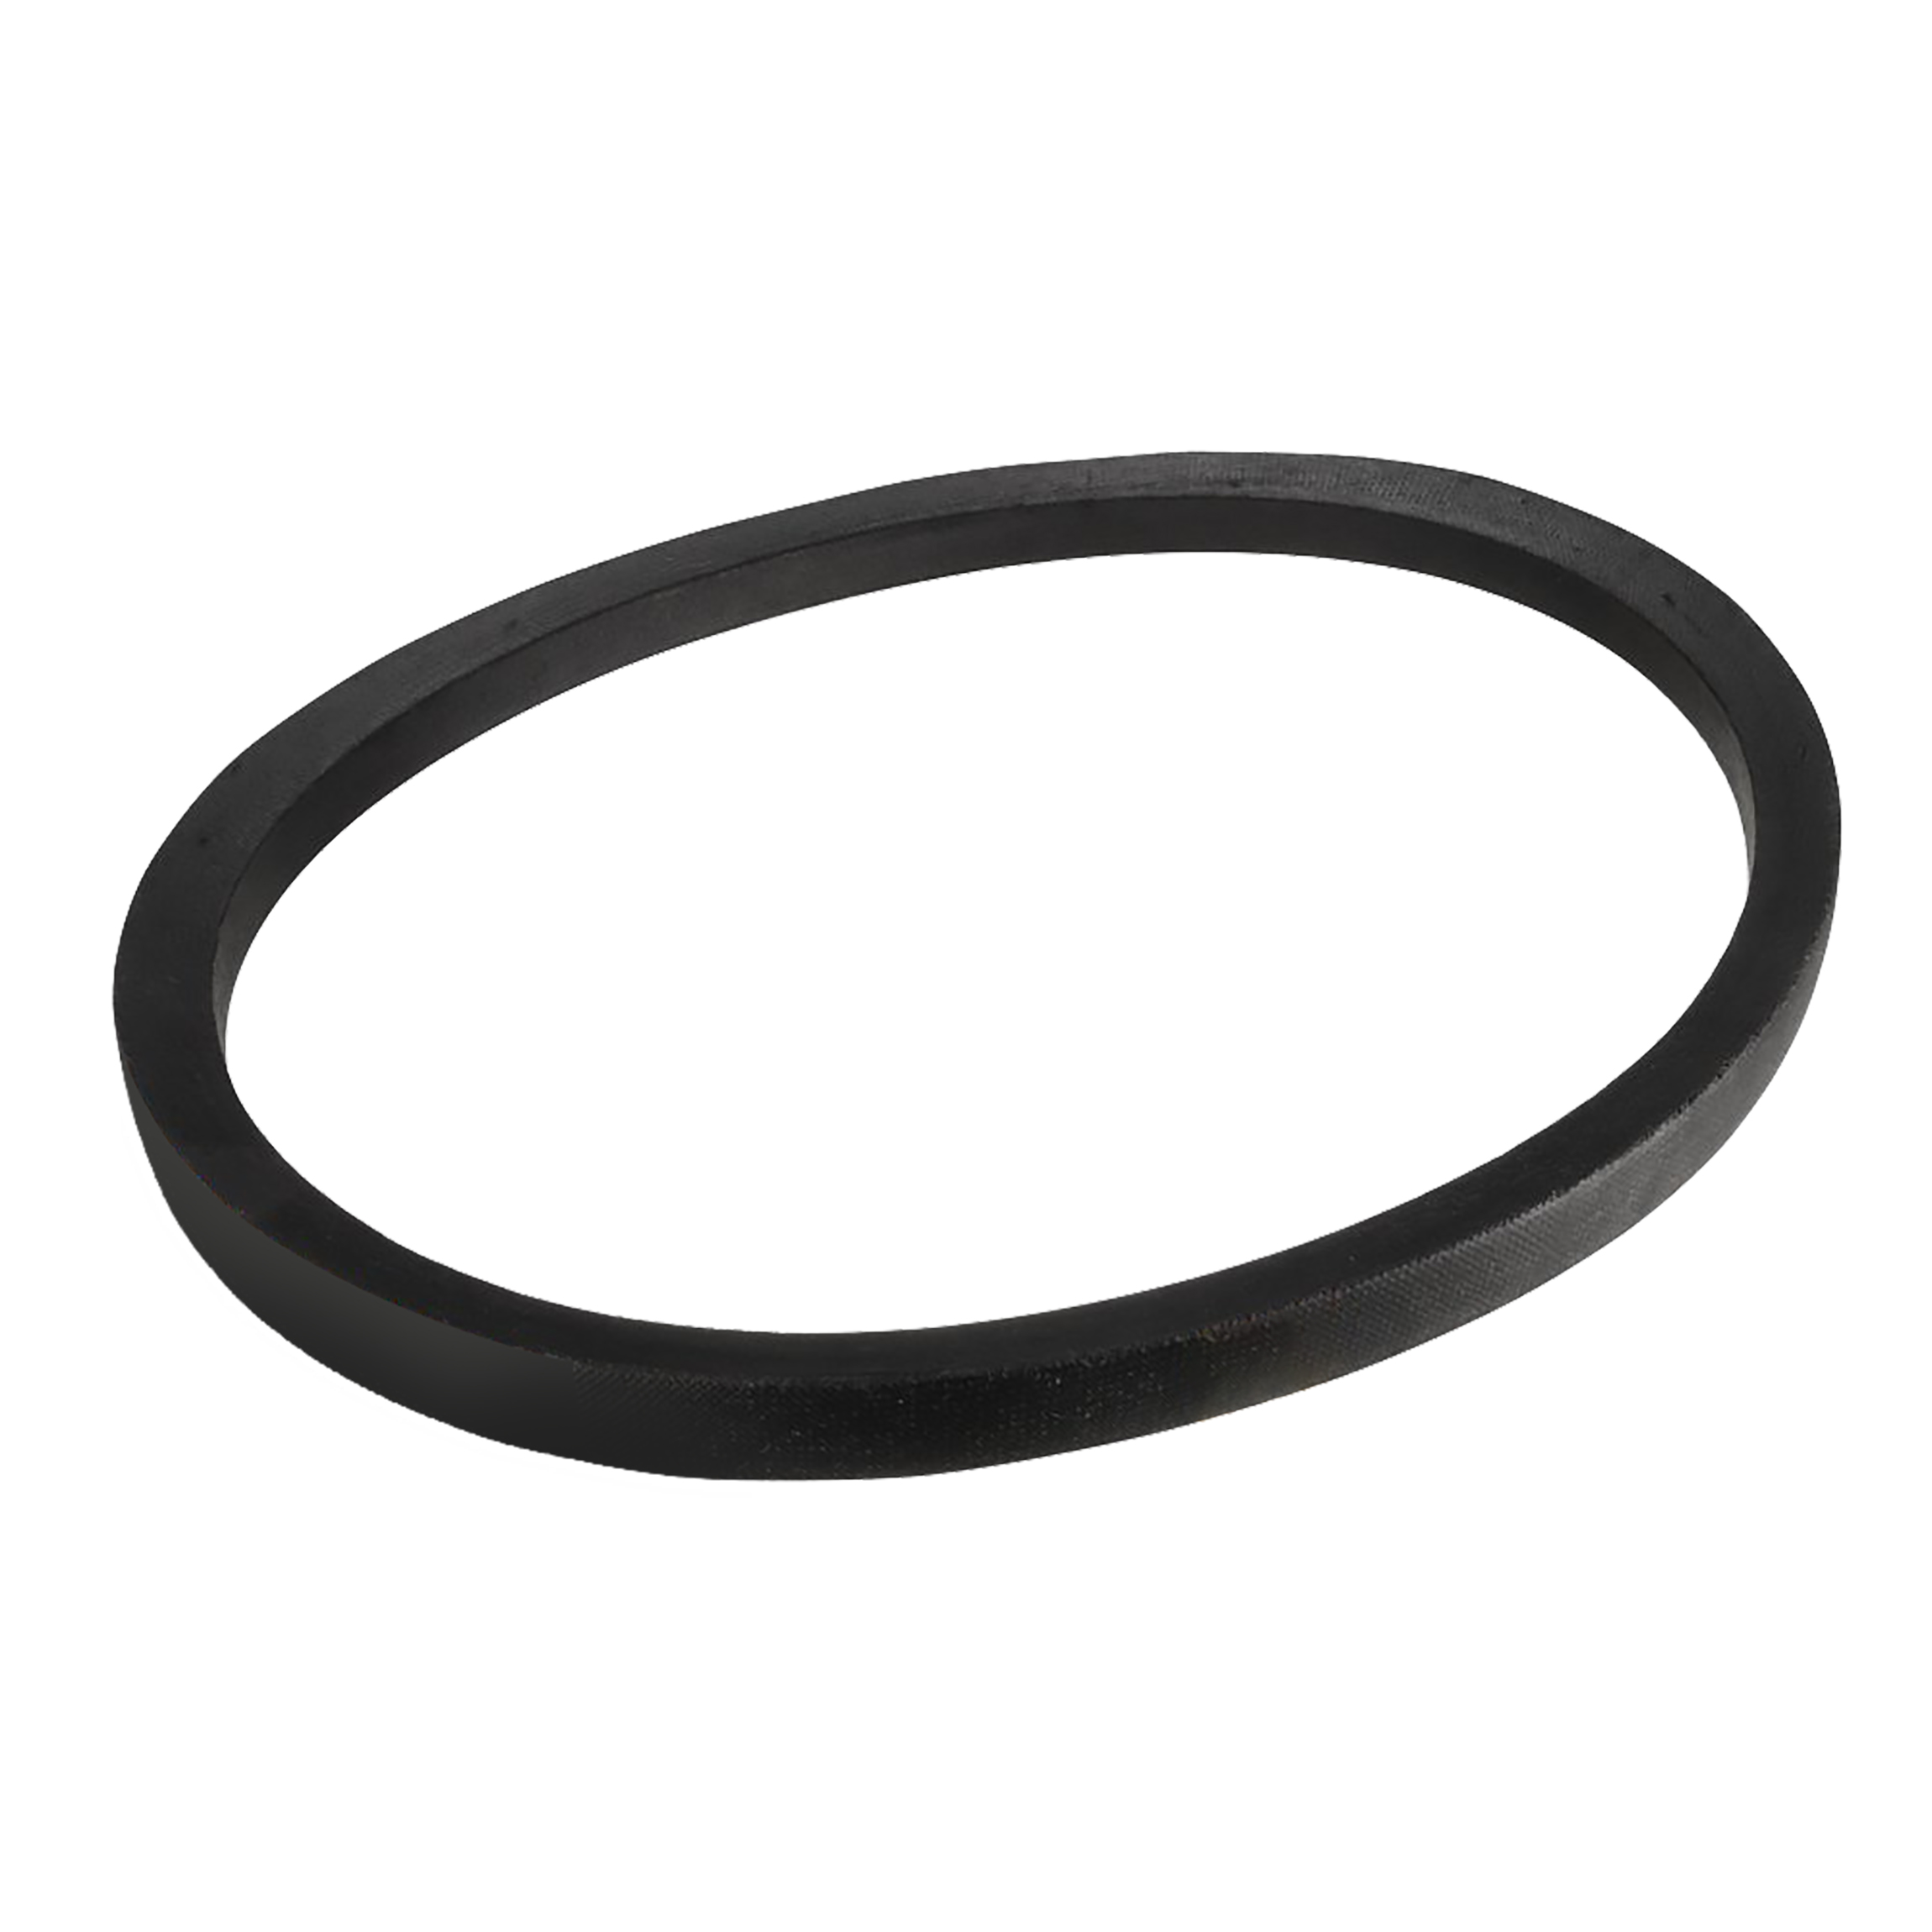  Rubber Belts For Industrial Machine Fan Belt V-Belt